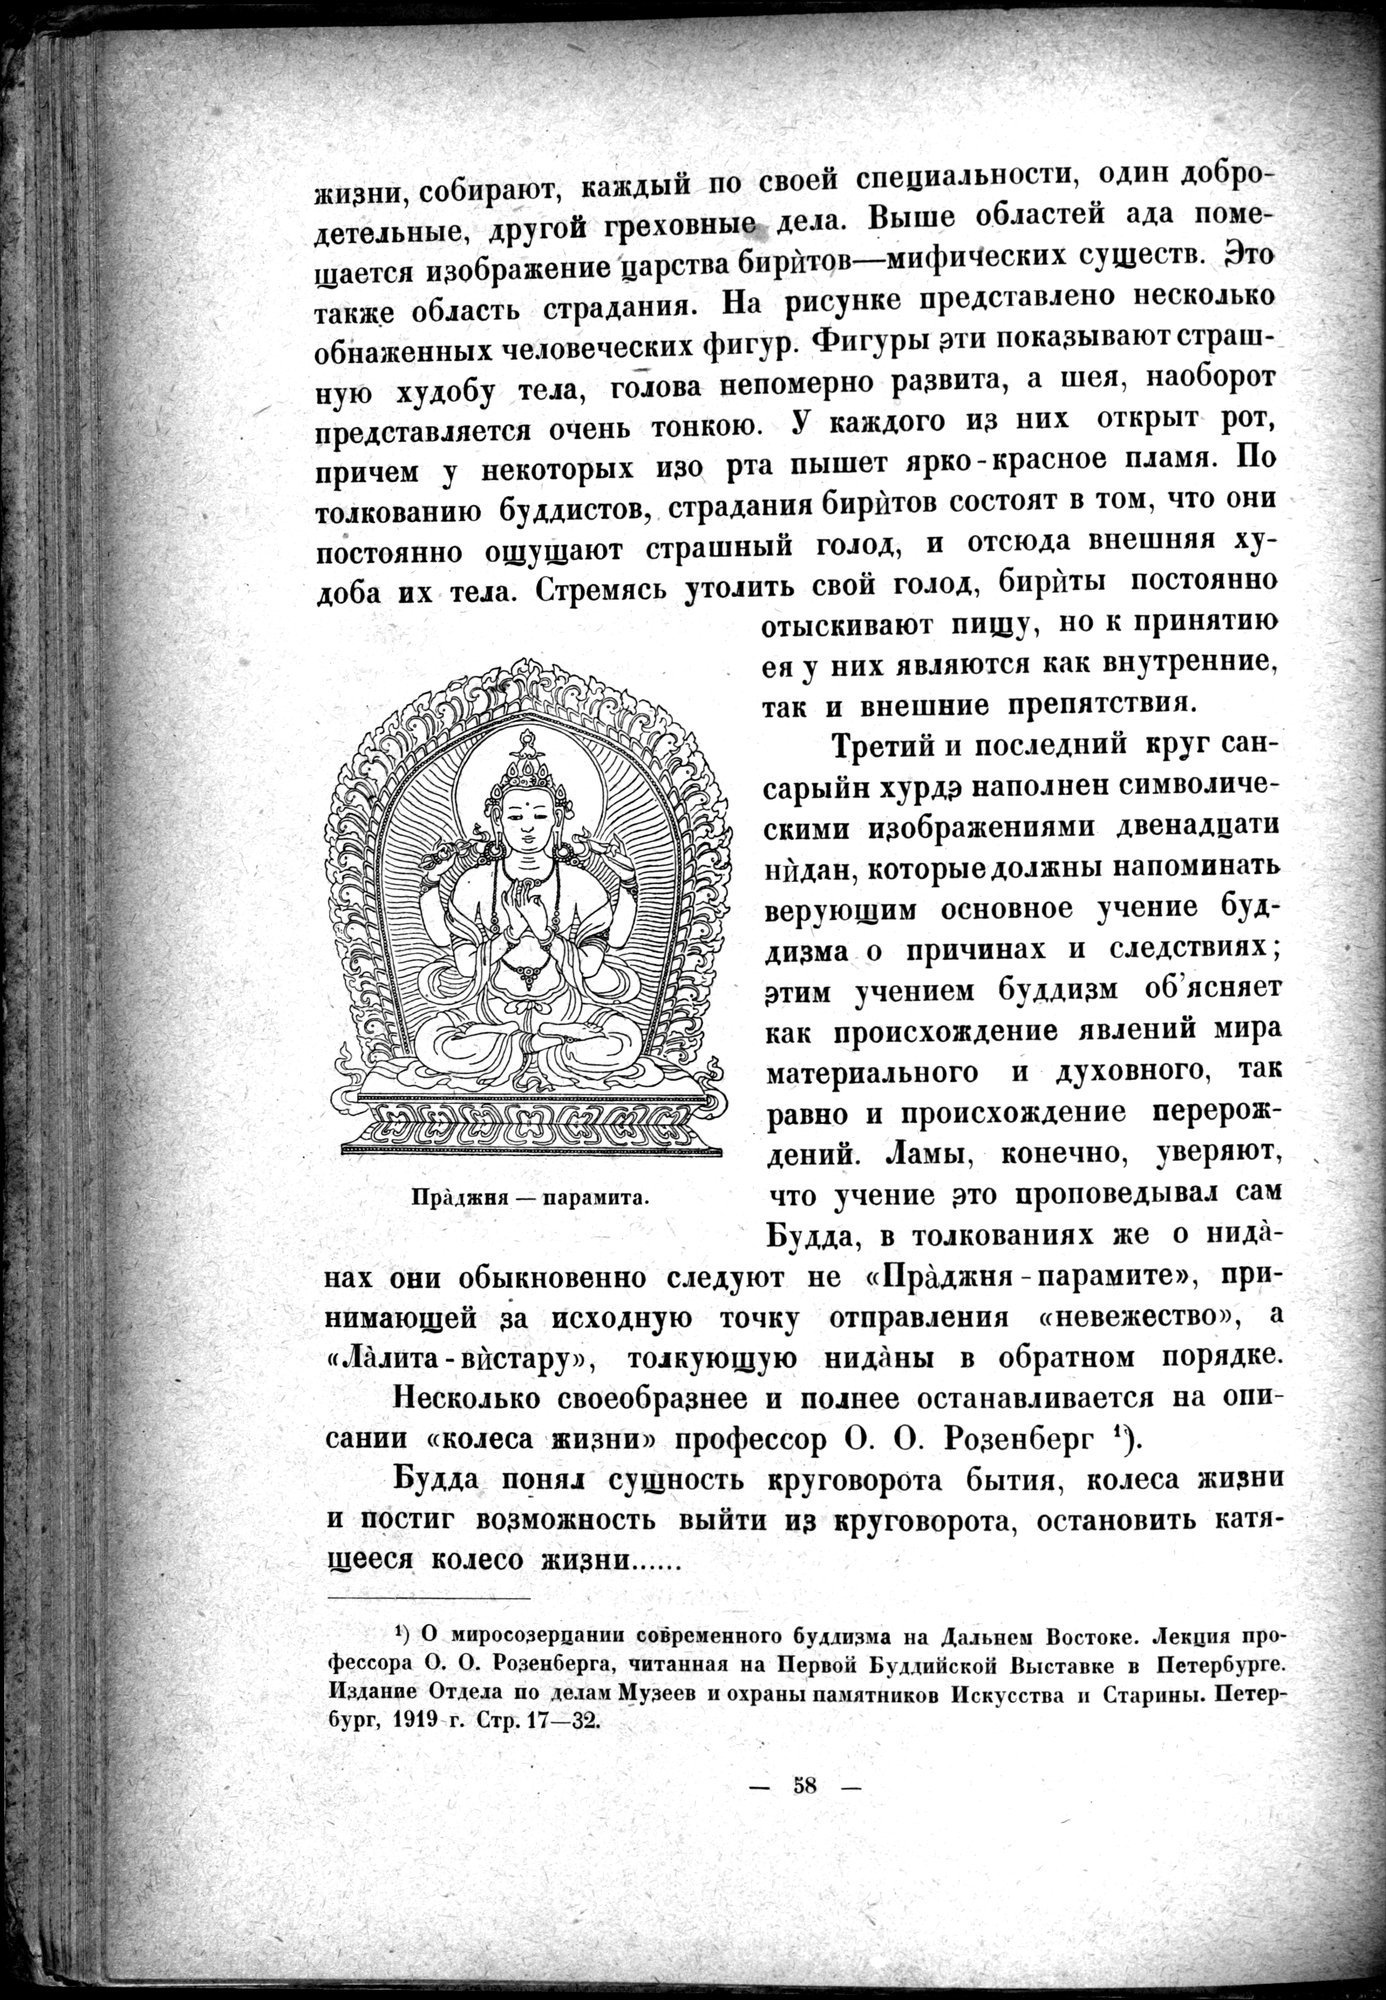 Mongoliya i Amdo i mertby gorod Khara-Khoto : vol.1 / Page 82 (Grayscale High Resolution Image)